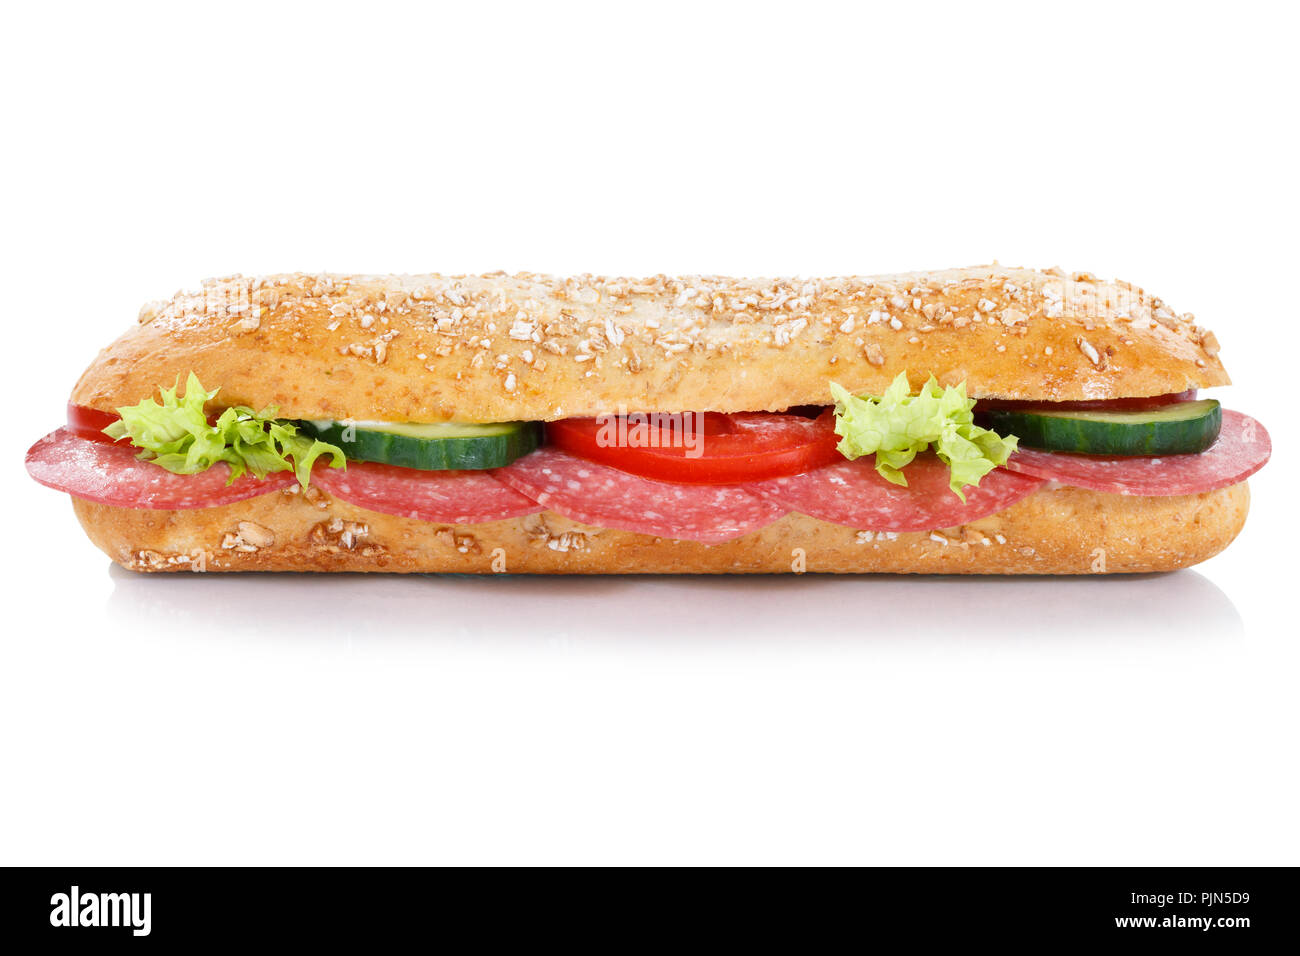 Baguette sub sándwich con salami granos enteros aislados lateral sobre un fondo blanco. Foto de stock